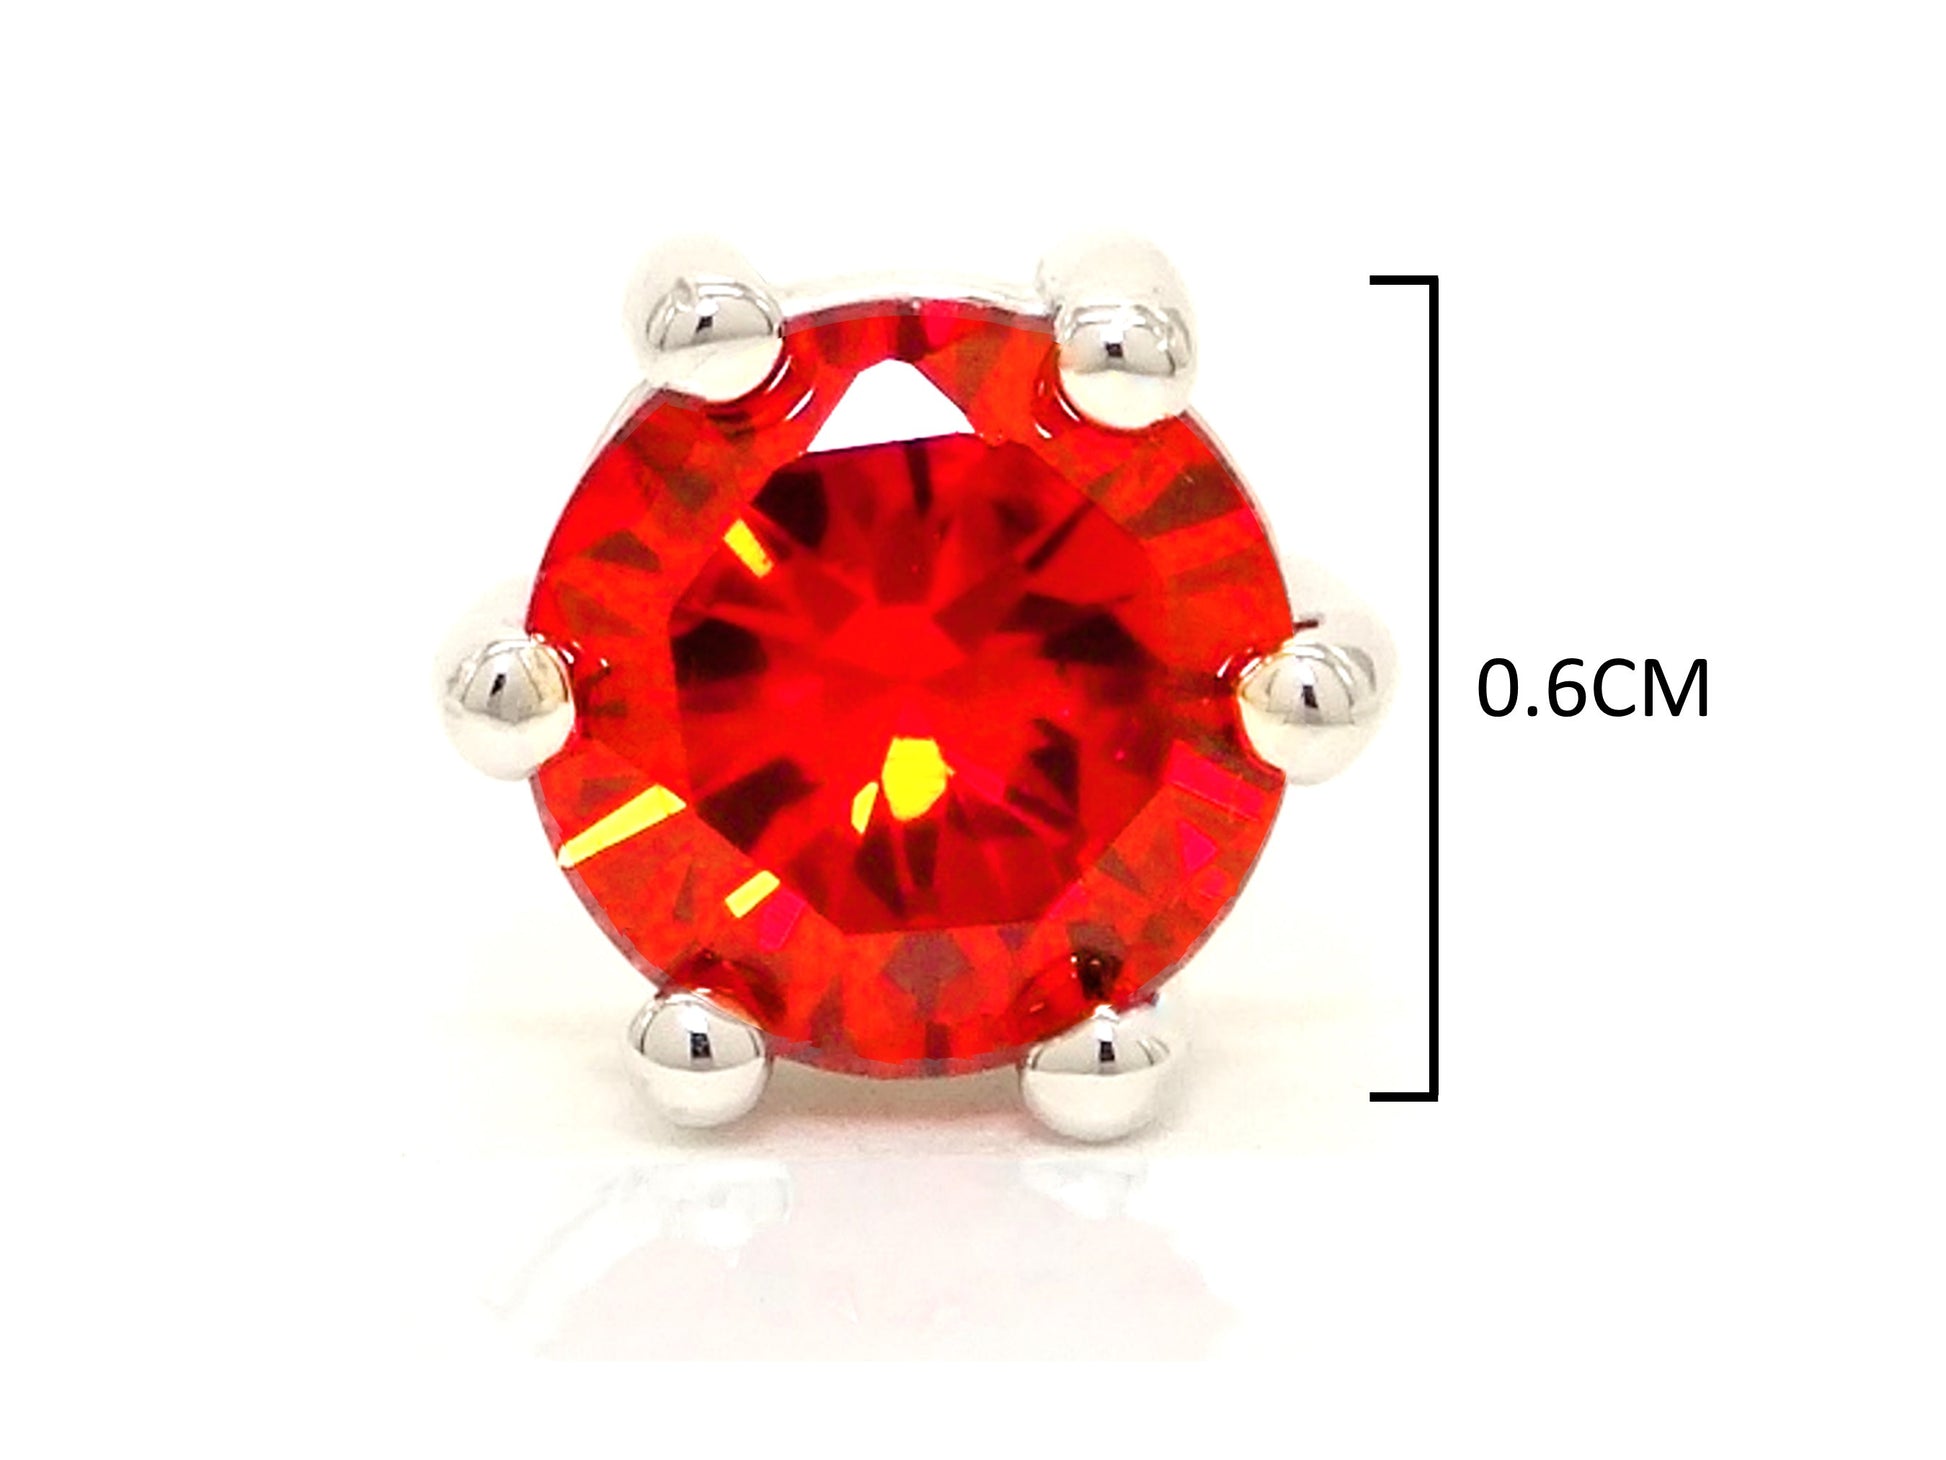 Fire red gem stud earrings MEASUREMENT